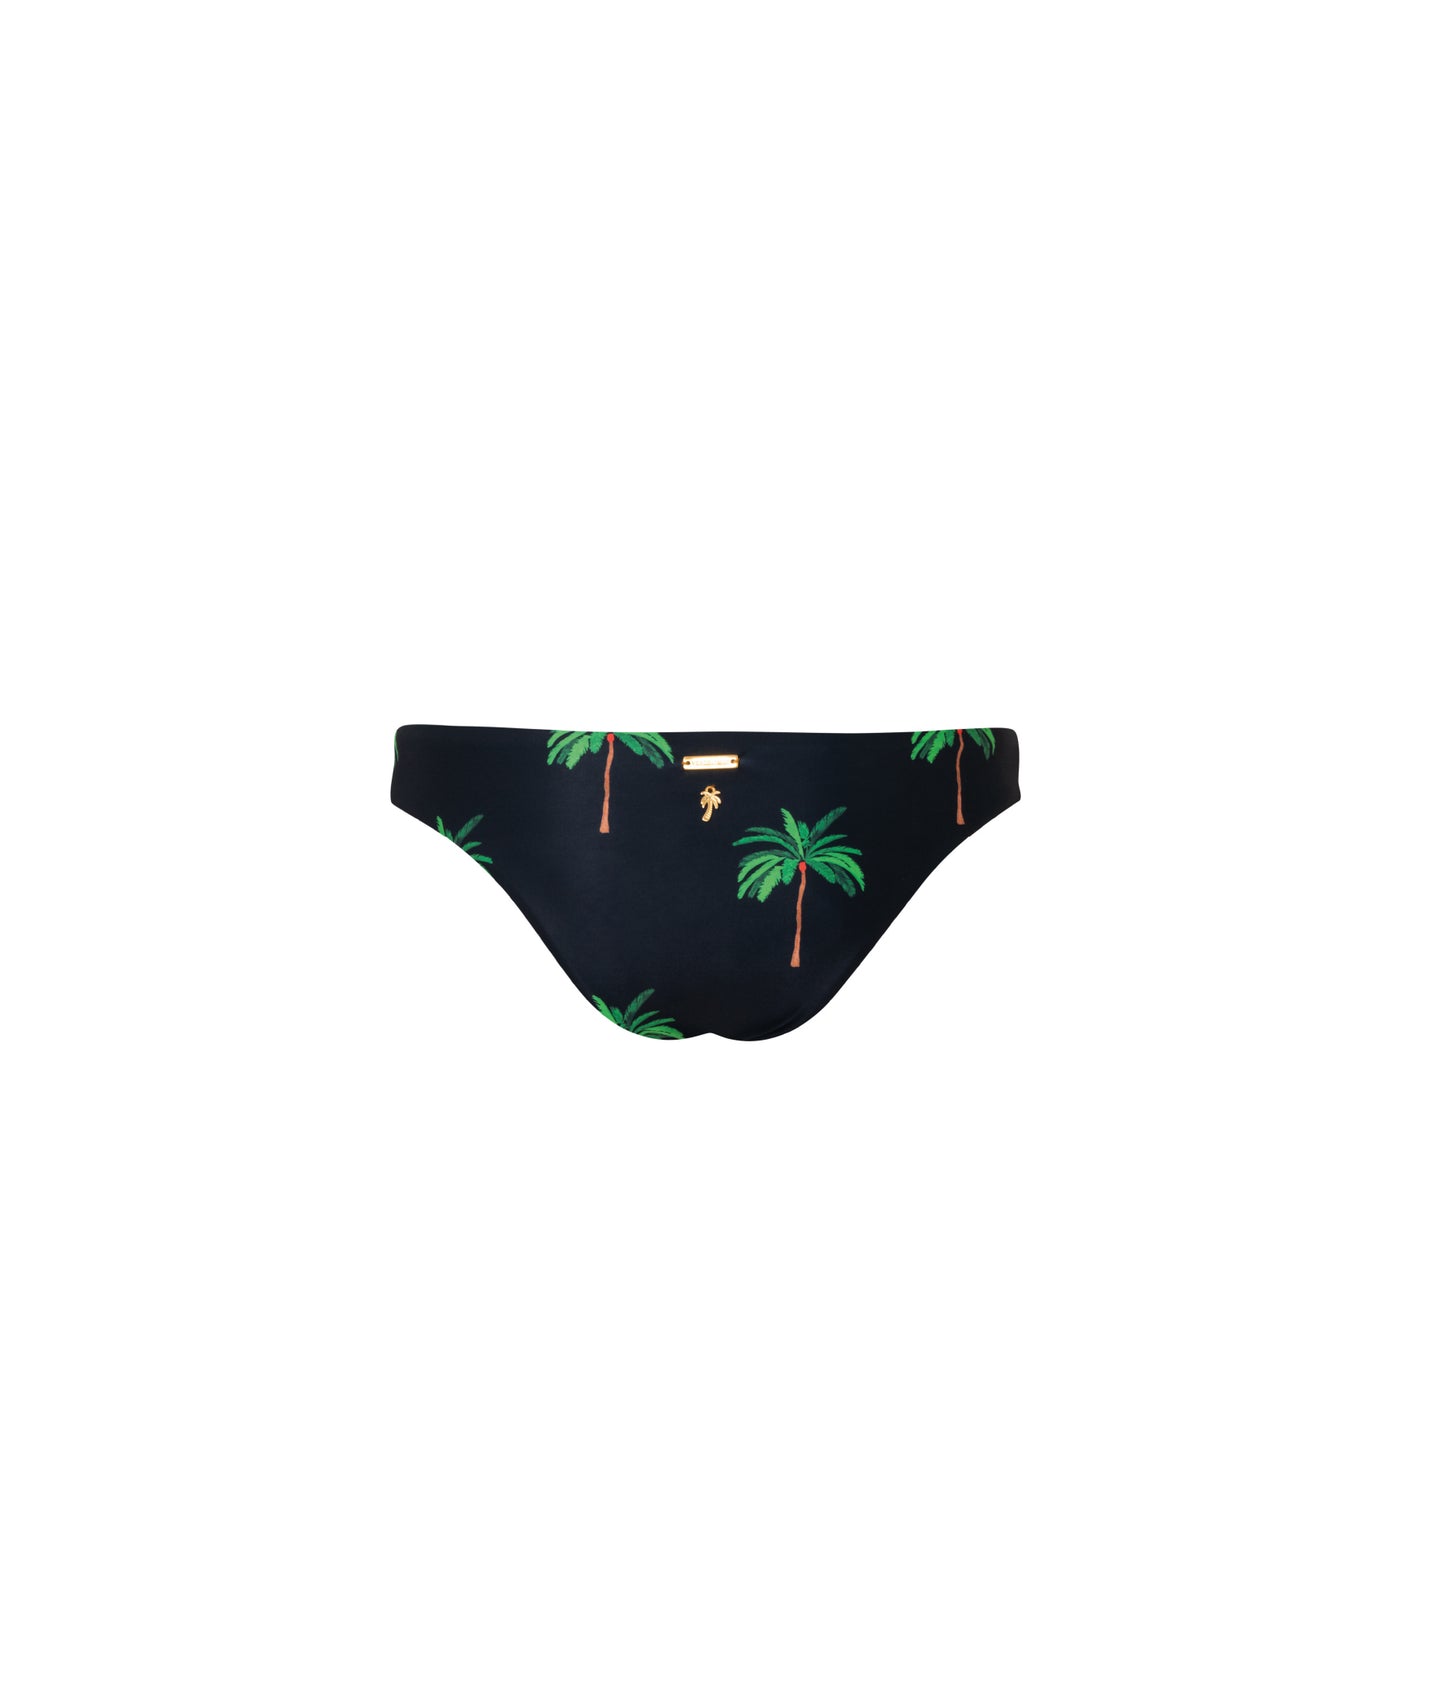 Verdelimon - Bikini Bottom -  Tunas - Printed - Black Palmeras - Back